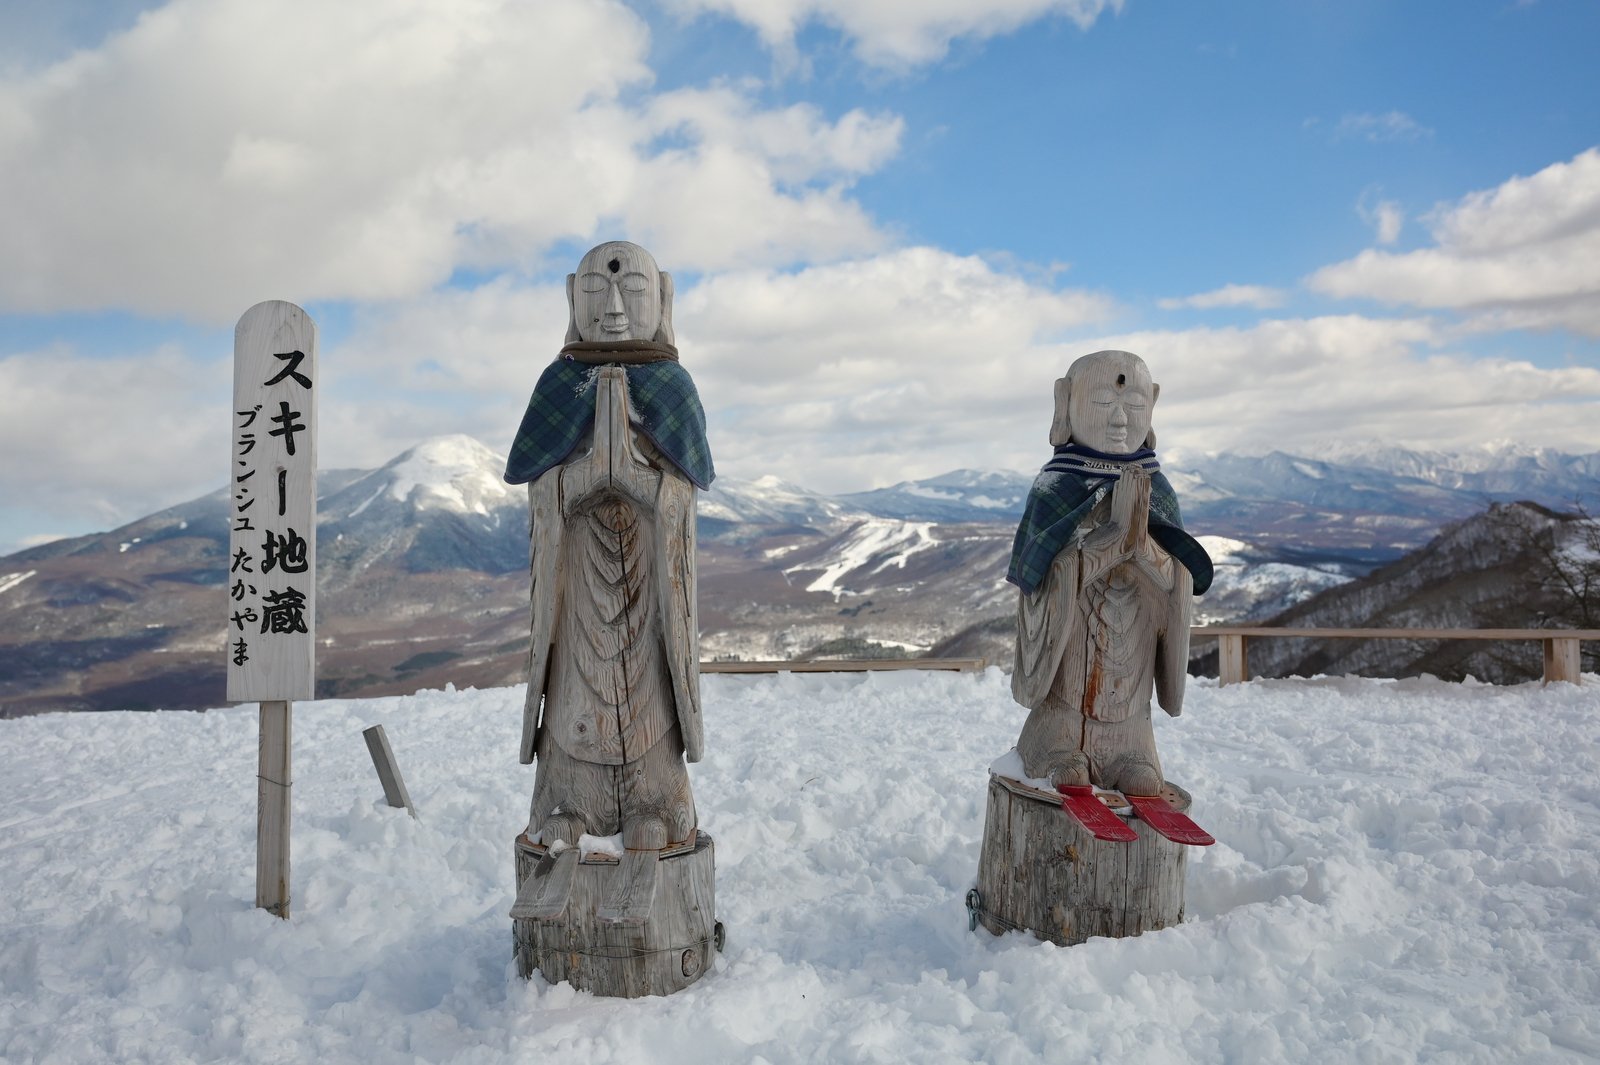 8 Peaks Ski Resort: Fair Weather Skiing – With Fresh Snow Guaranteed